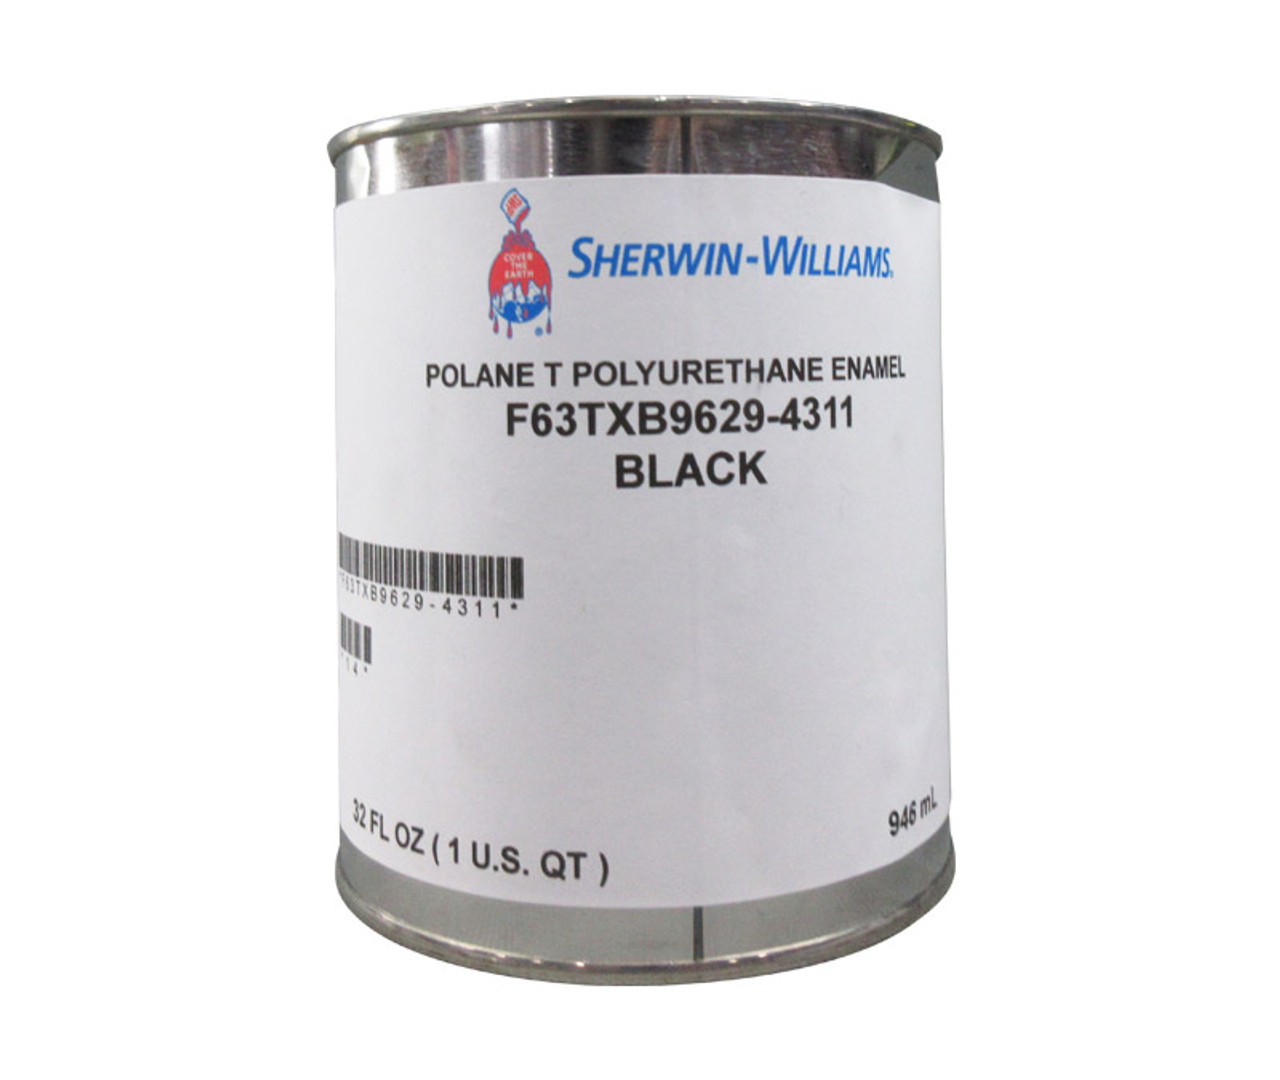 Sherwin-Williams H99 WY 82 POLANE L Semi-Gloss White BAC 70913 Polyurethane Enamel  Paint - Gallon Can at